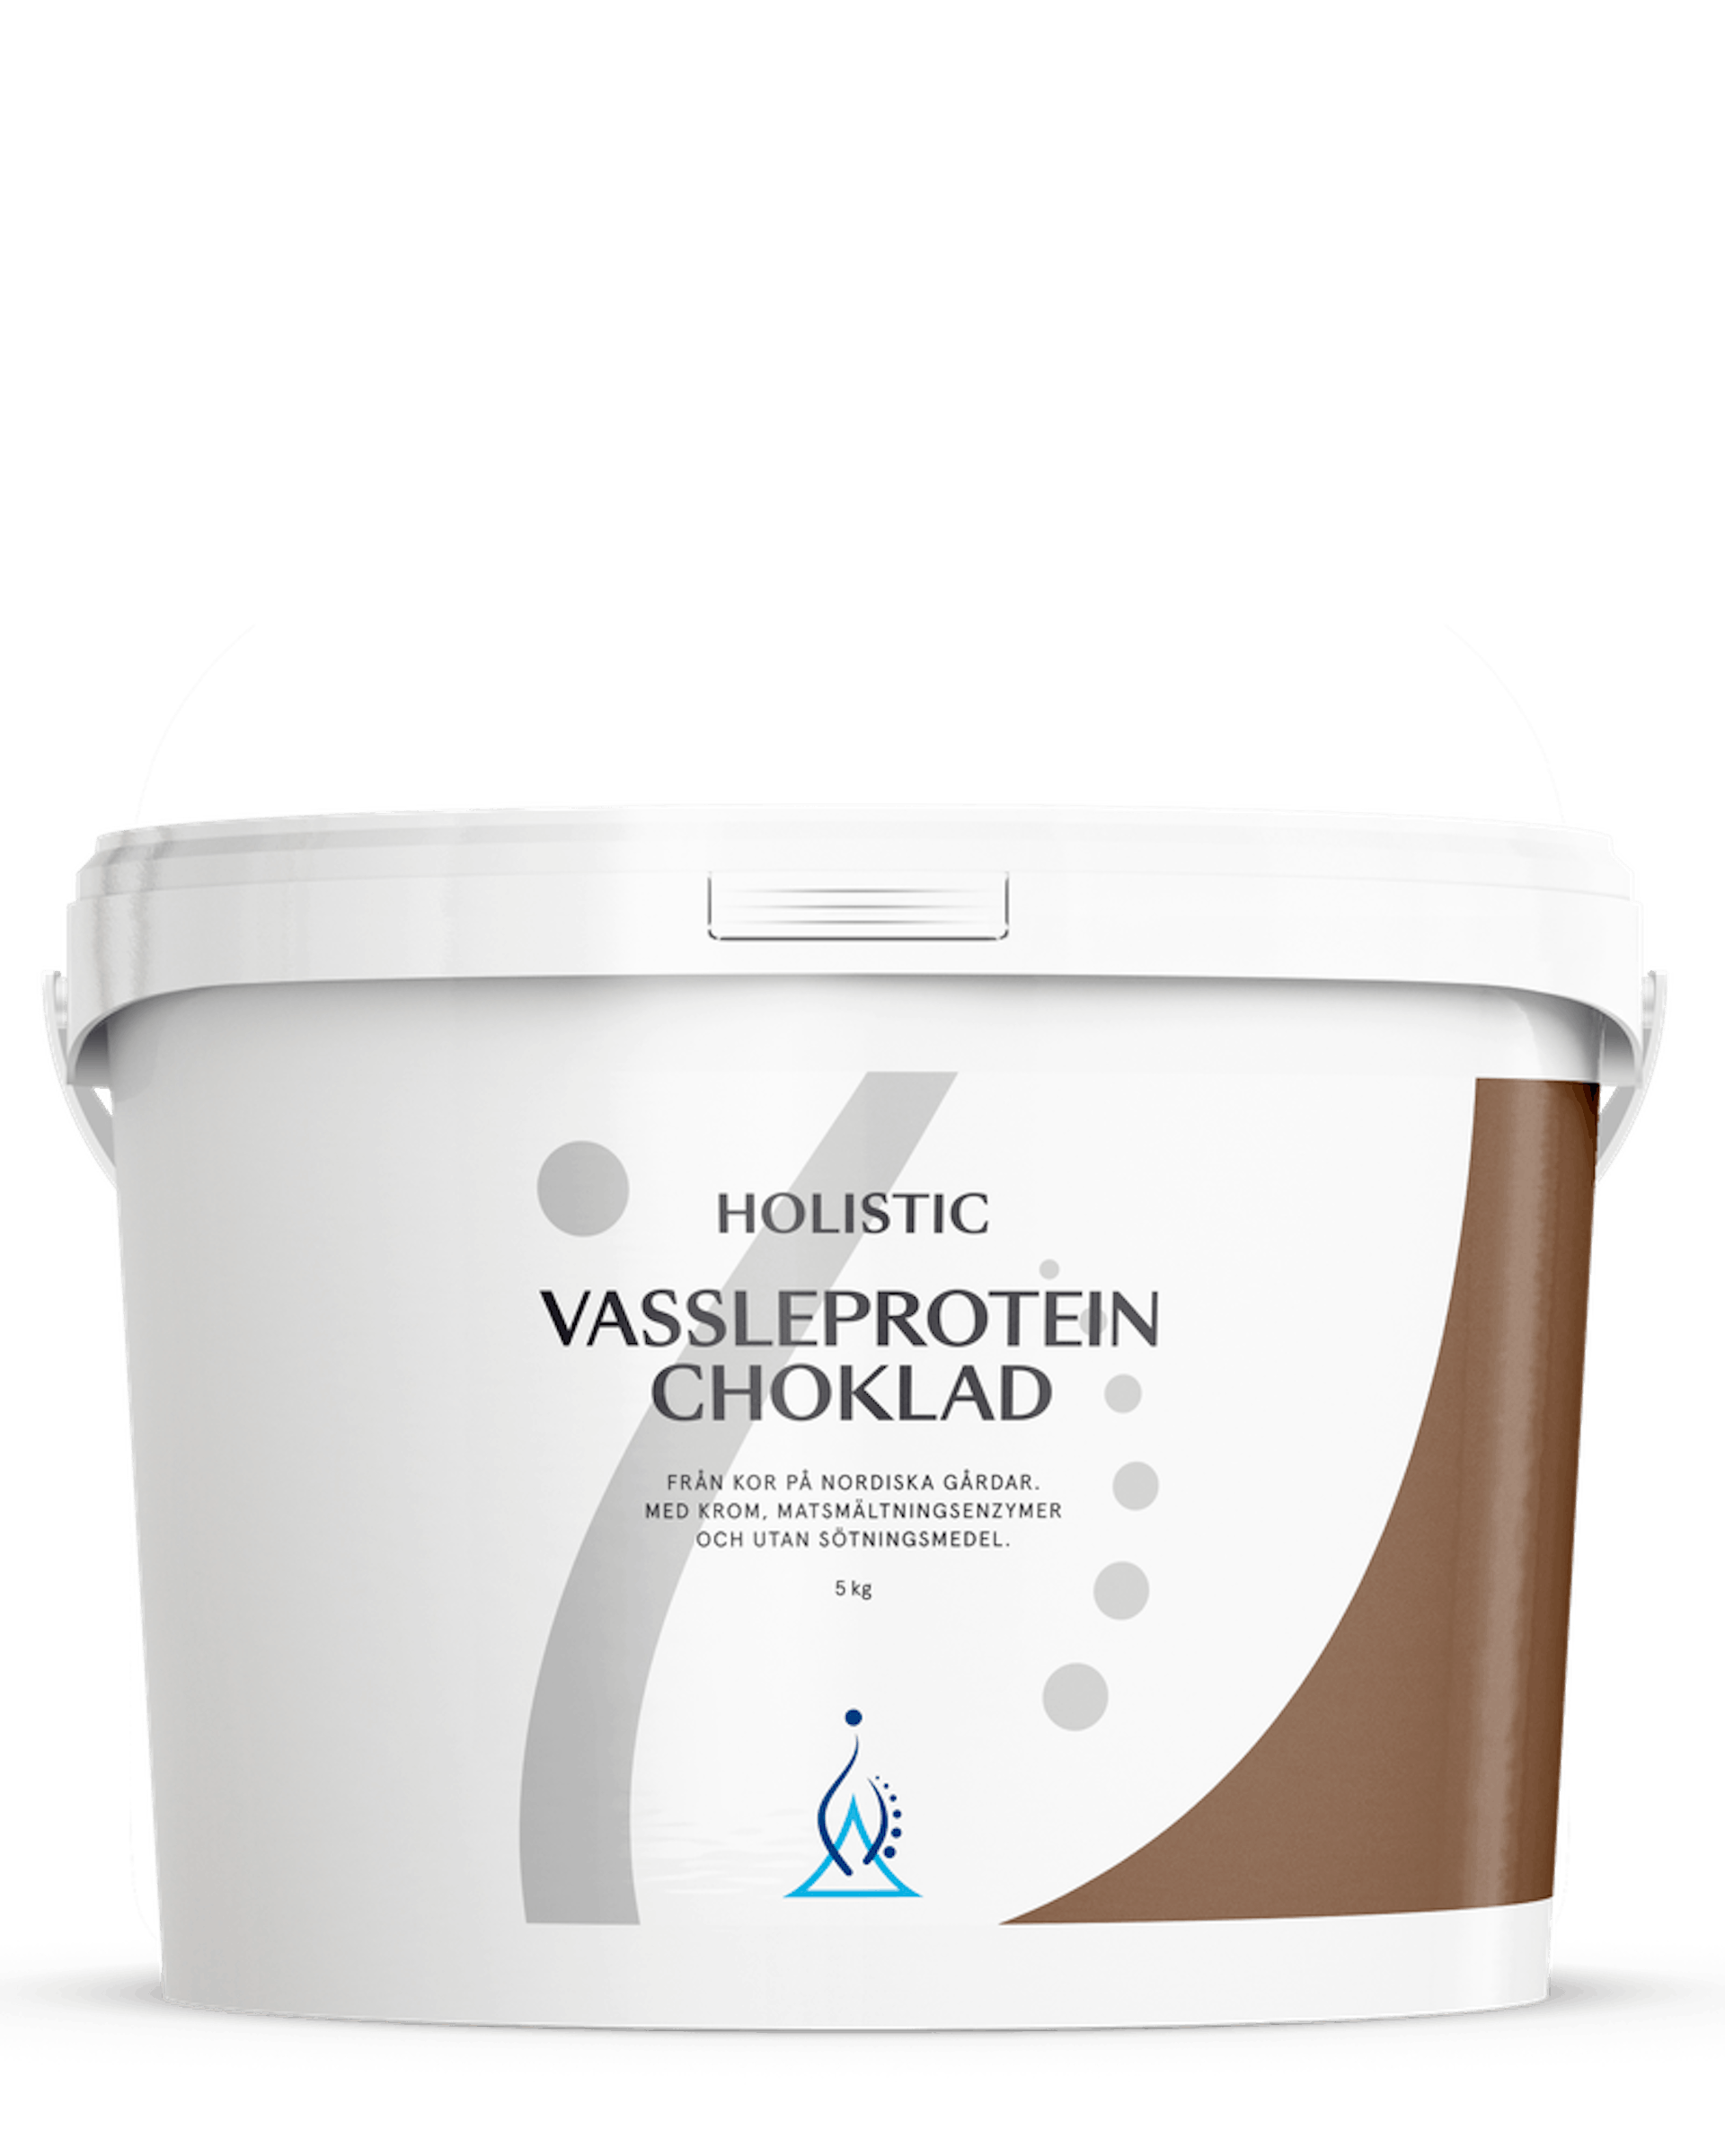 Vassleprotein choklad, 5 kg (1 av 1)